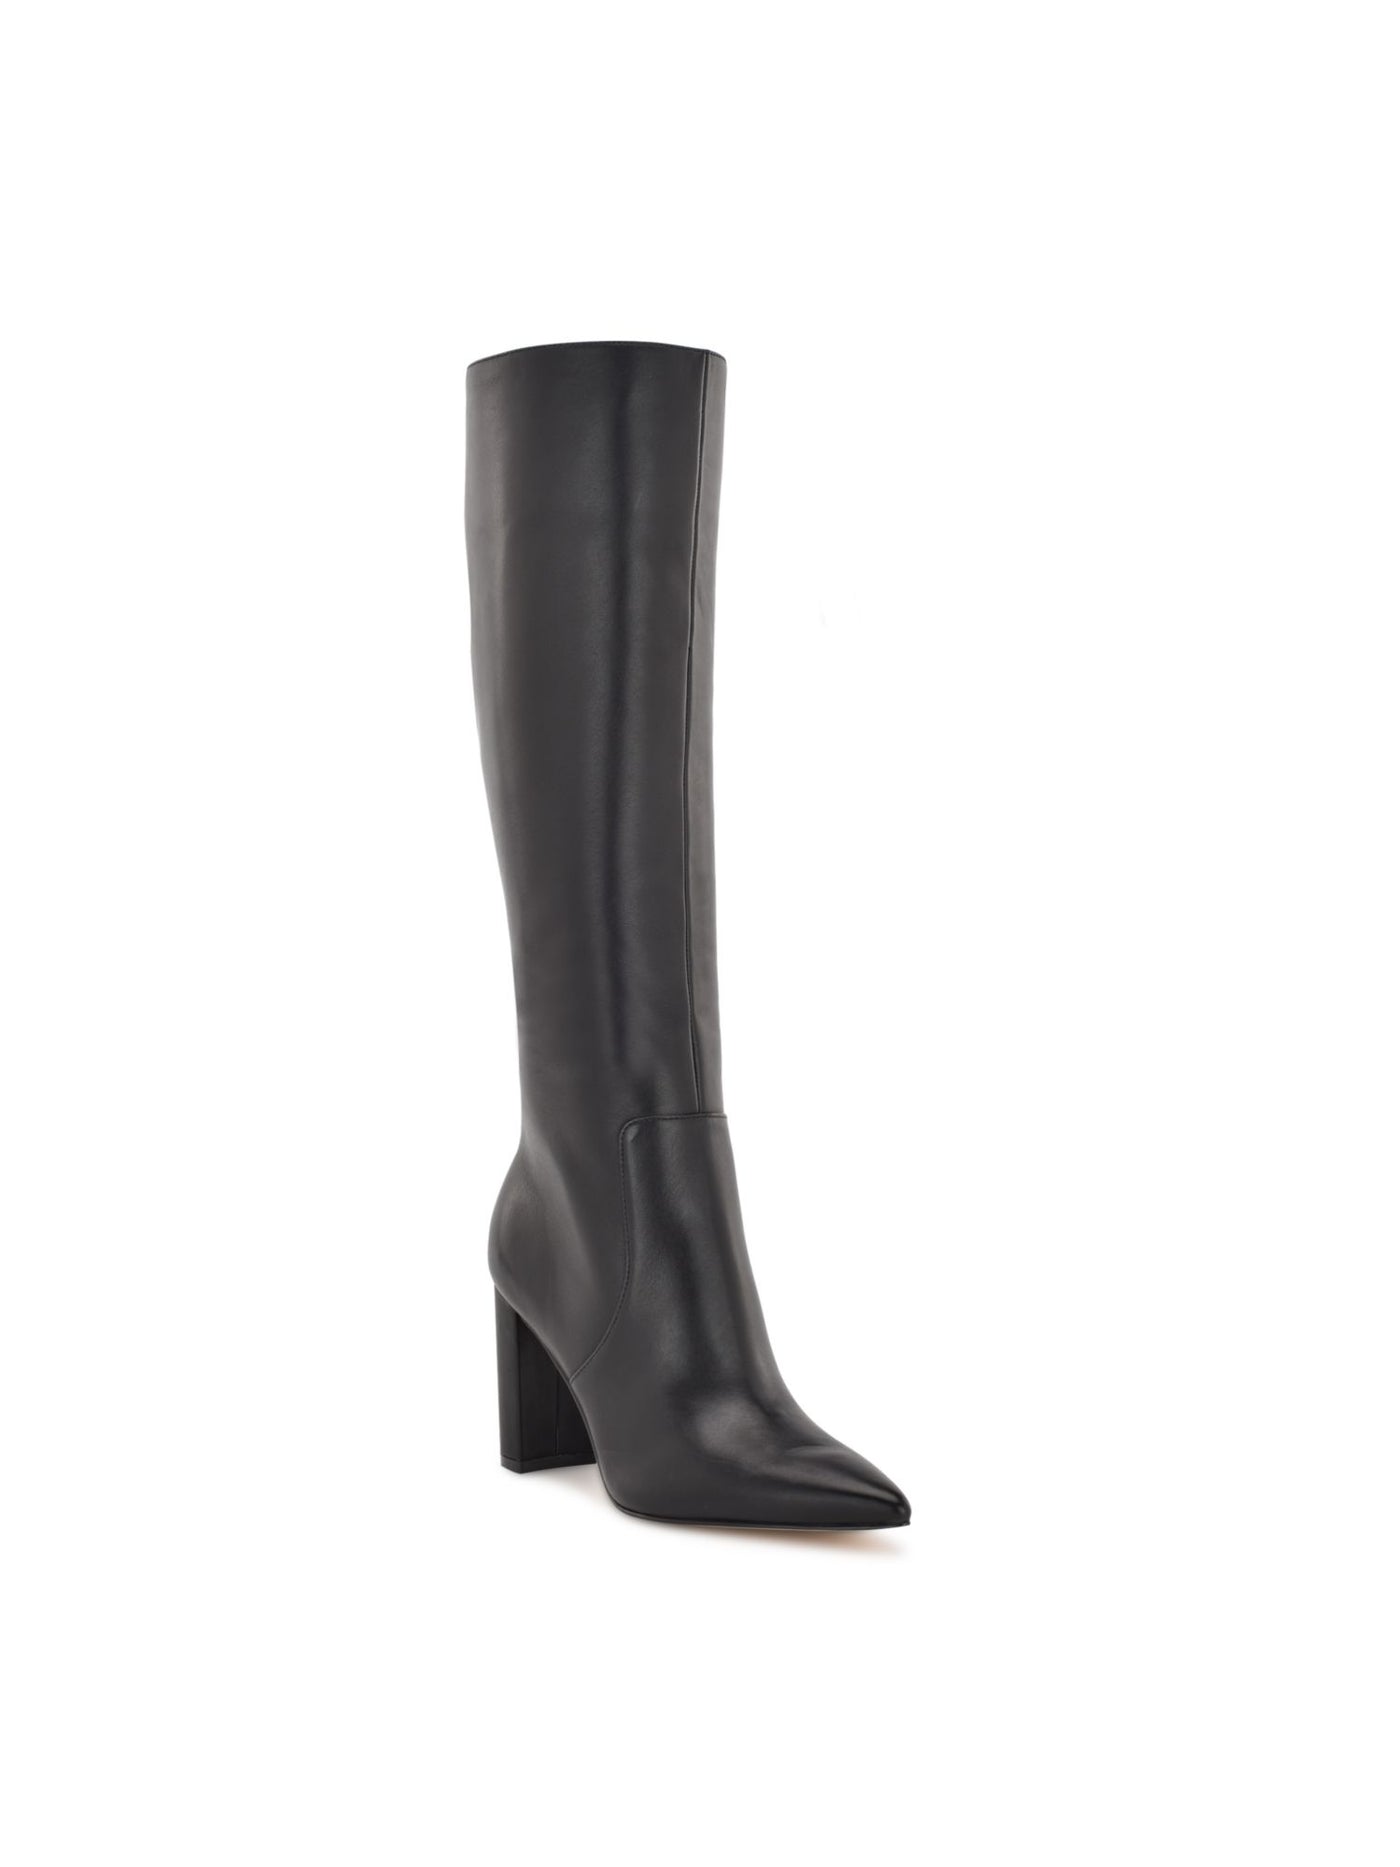 NINE WEST Womens Black Goring Padded Danee Pointed Toe Block Heel Zip-Up Dress Boots 5.5 M